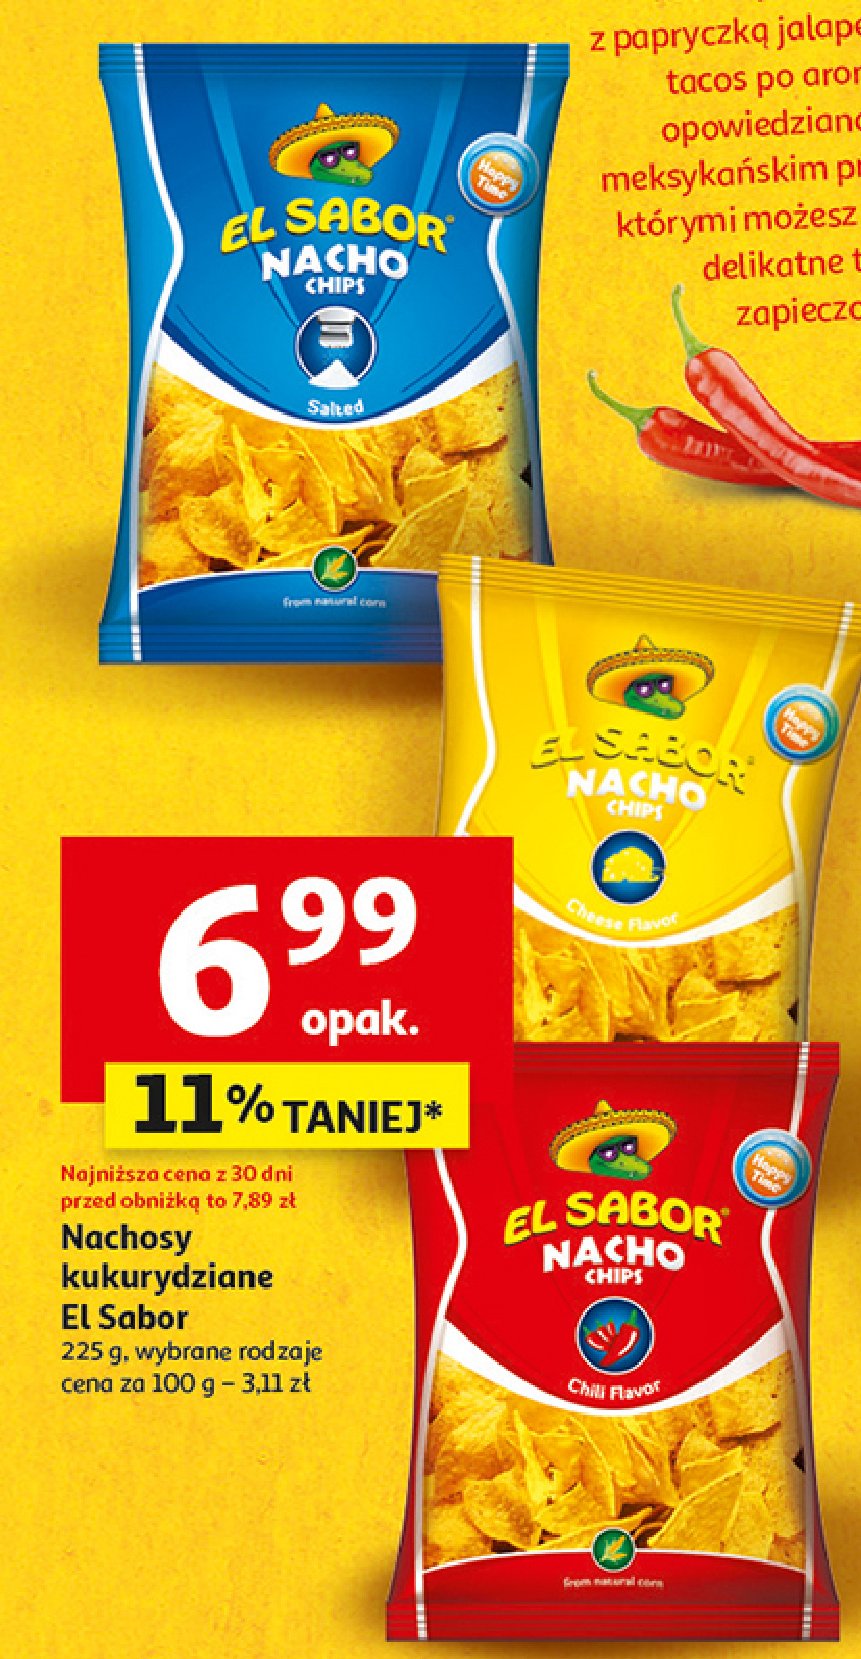 Nachos salted El sabor nacho promocja